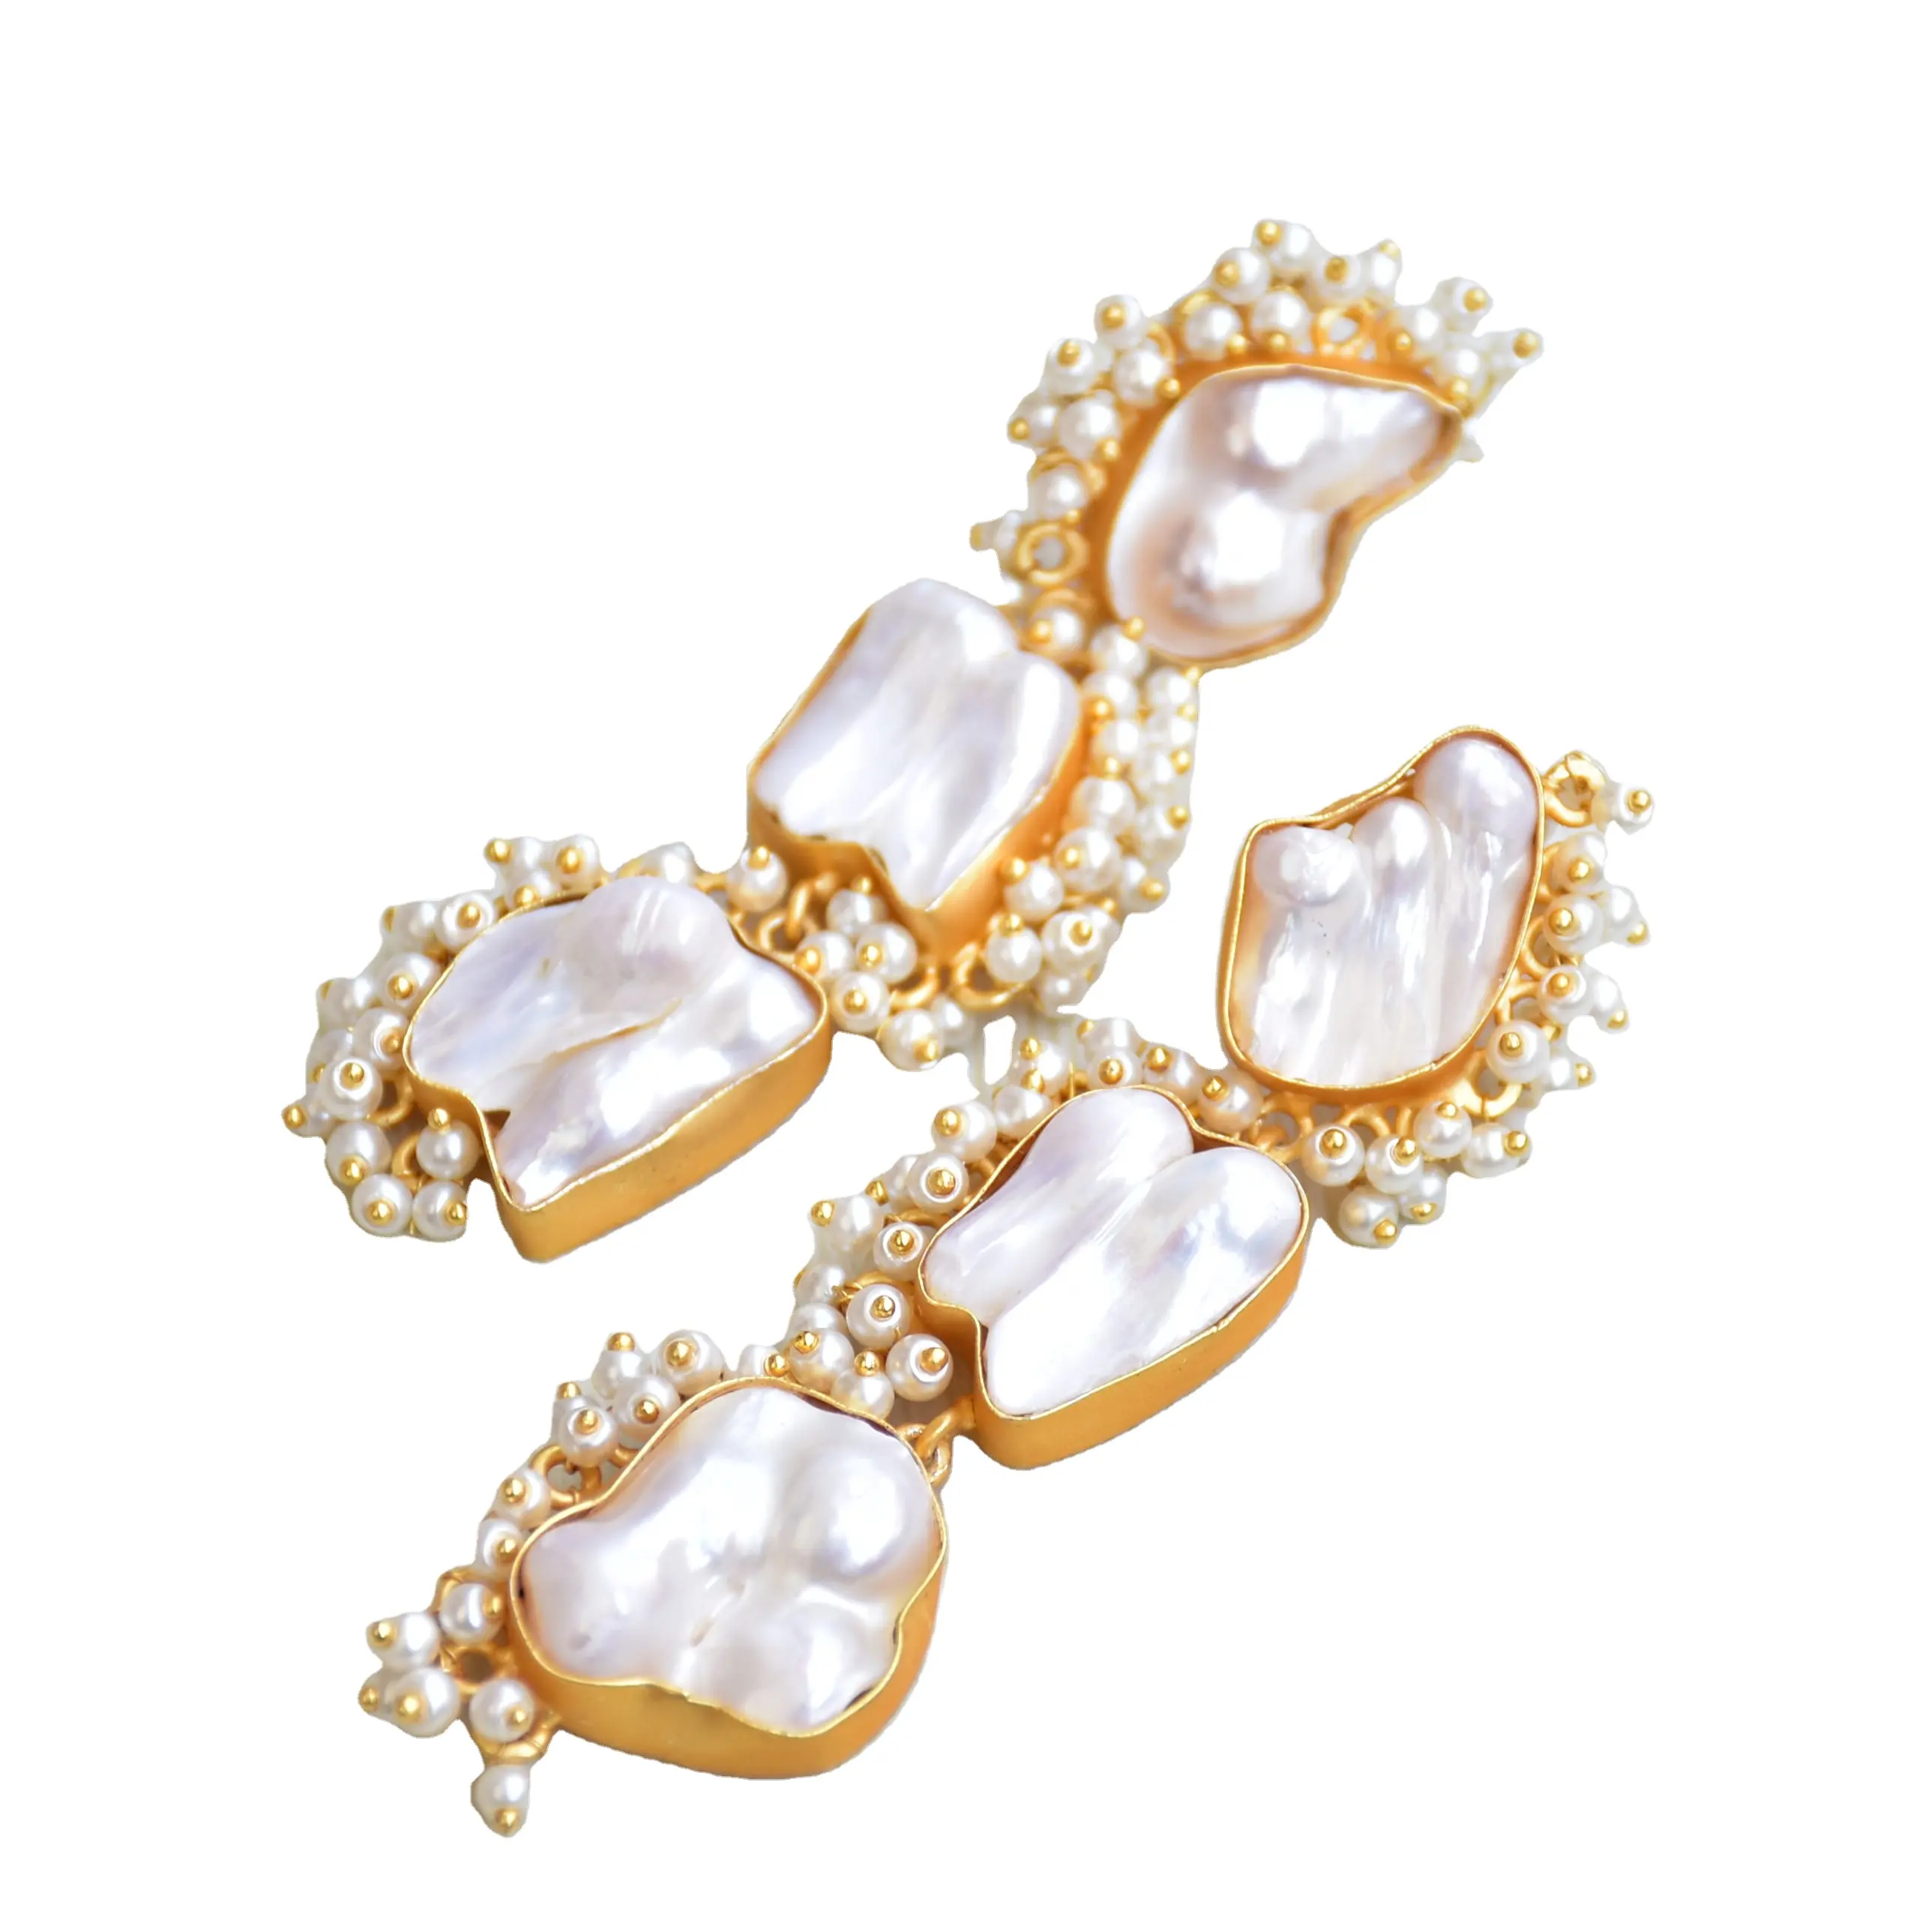 Anting-Anting Mutiara Barok Menjuntai Perhiasan Mutiara Emas Produsen dan Pemasok Grosir India untuk Perhiasan Mode Pengantin